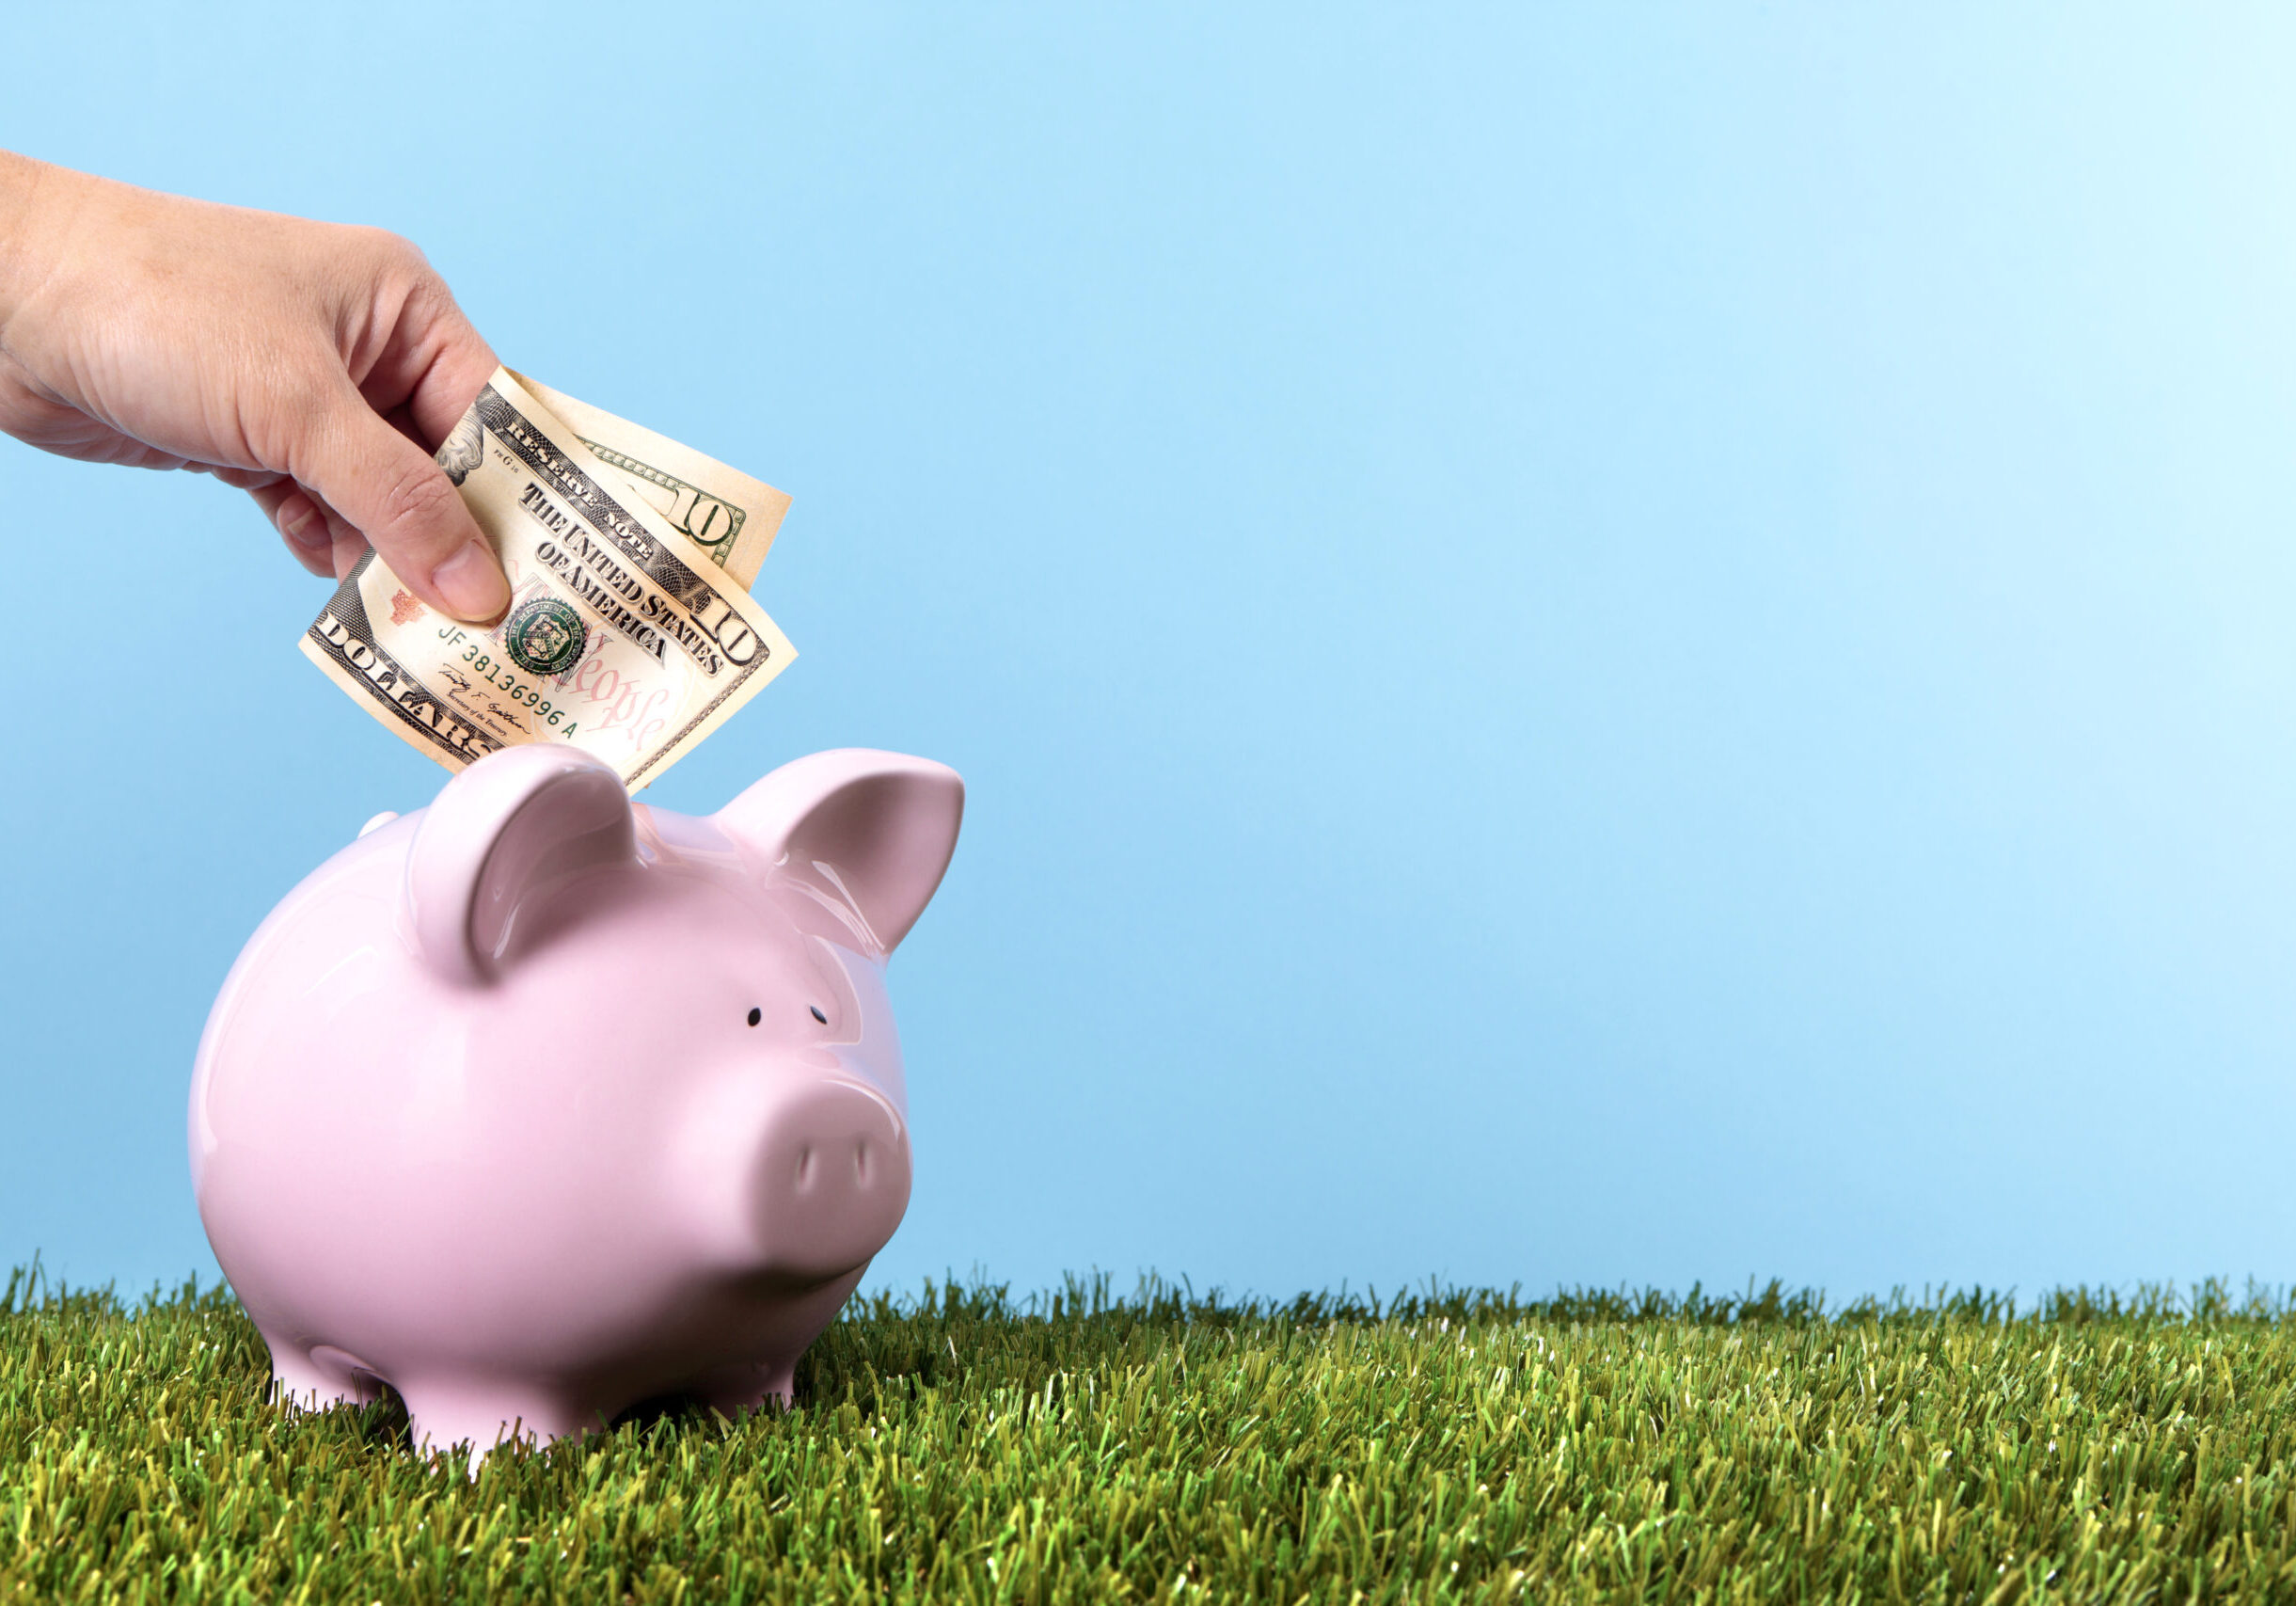 Hand putting a ten dollar bill into a pink piggy bank, with grass and blue sky